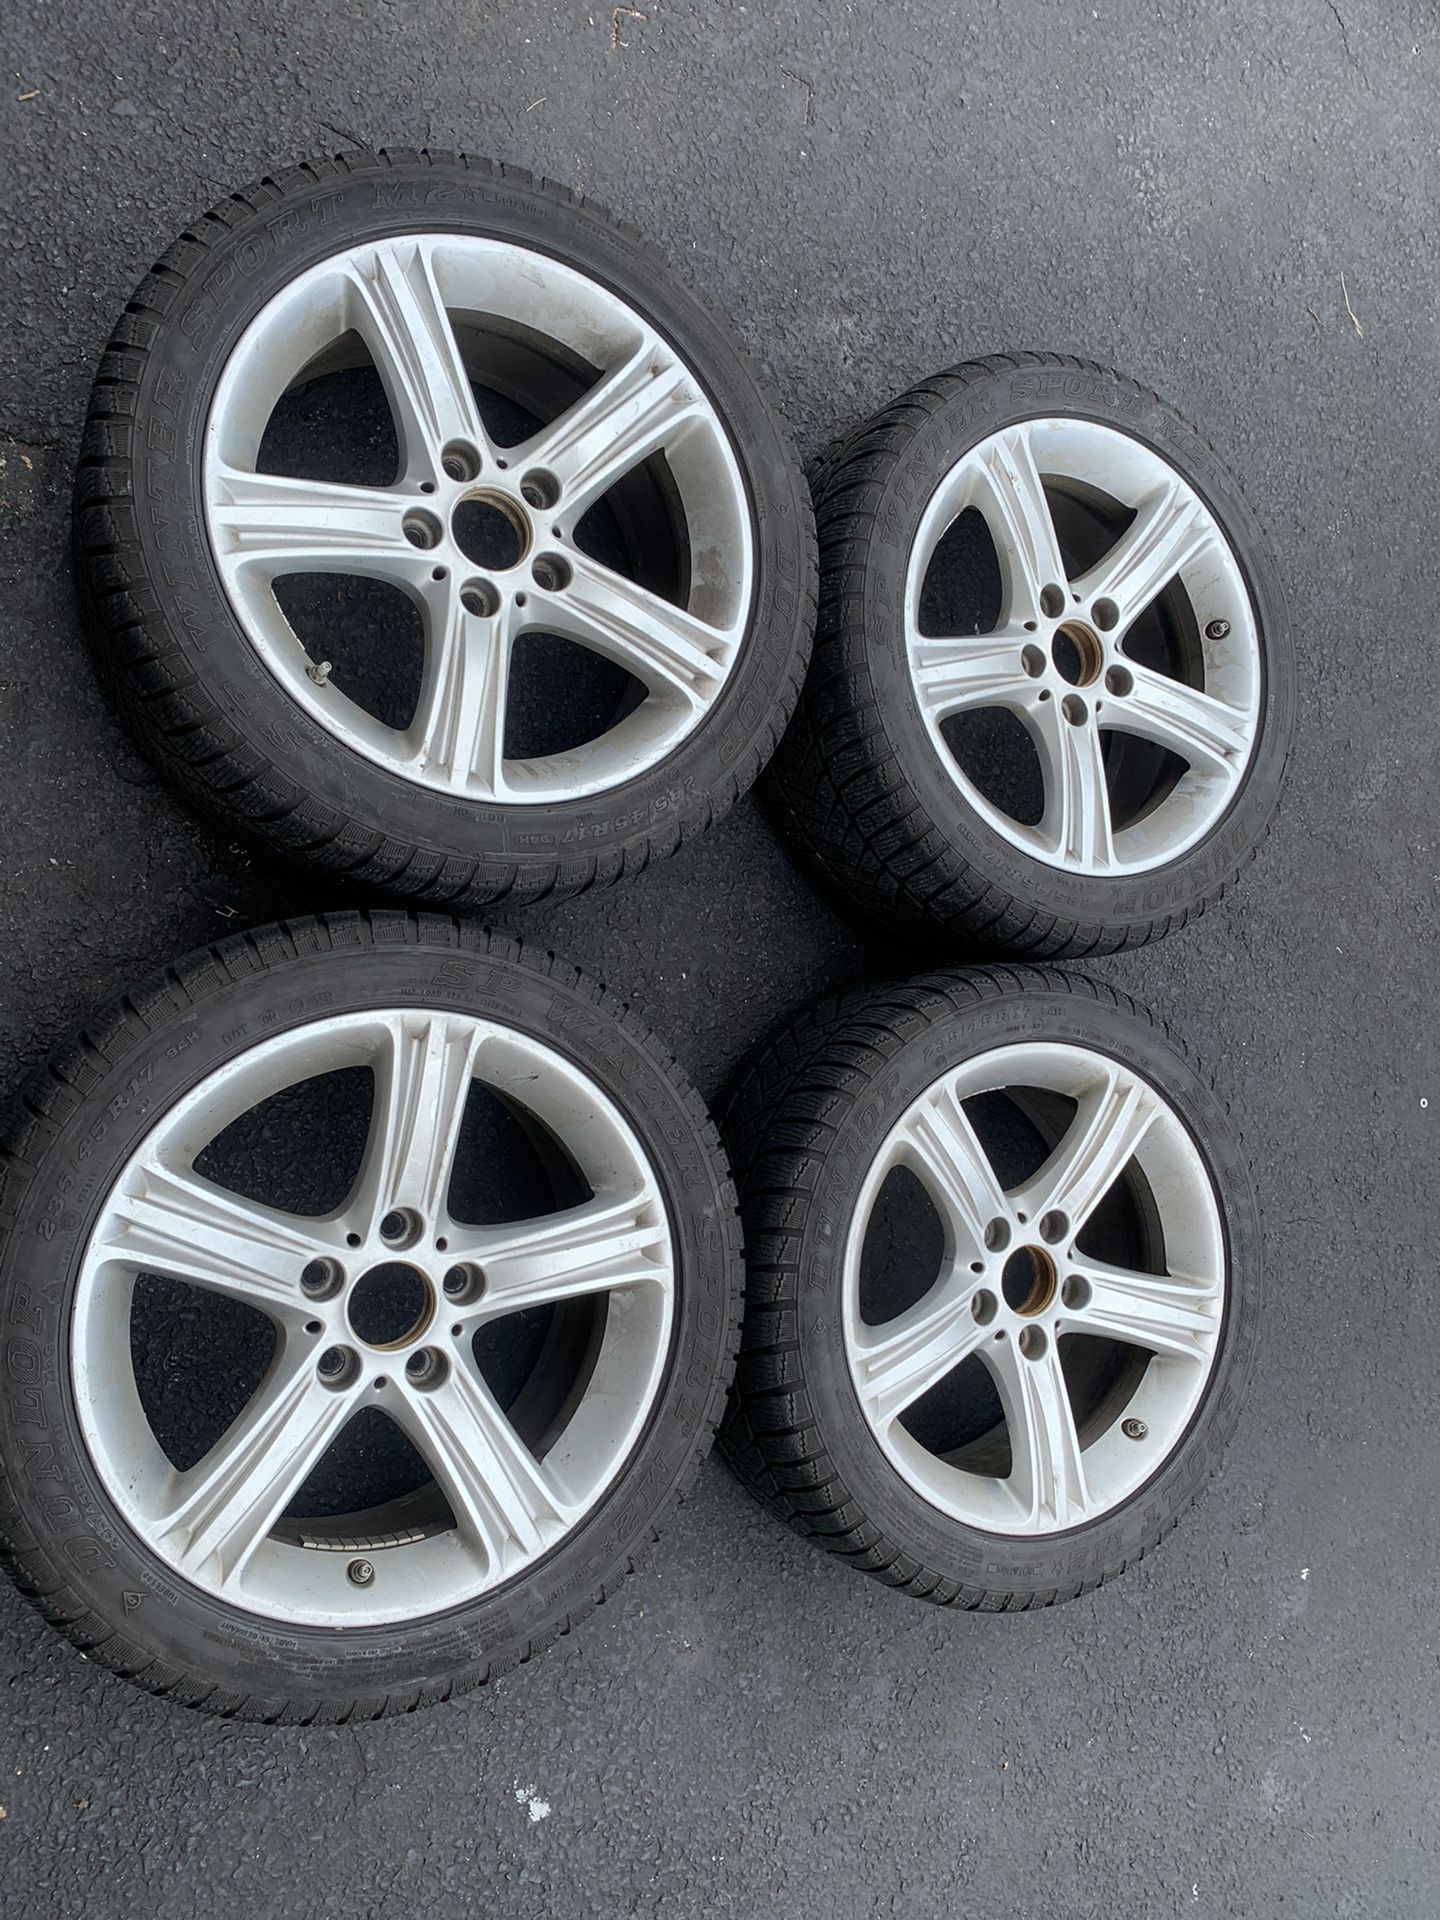 2014 factory BMW 328i wheels